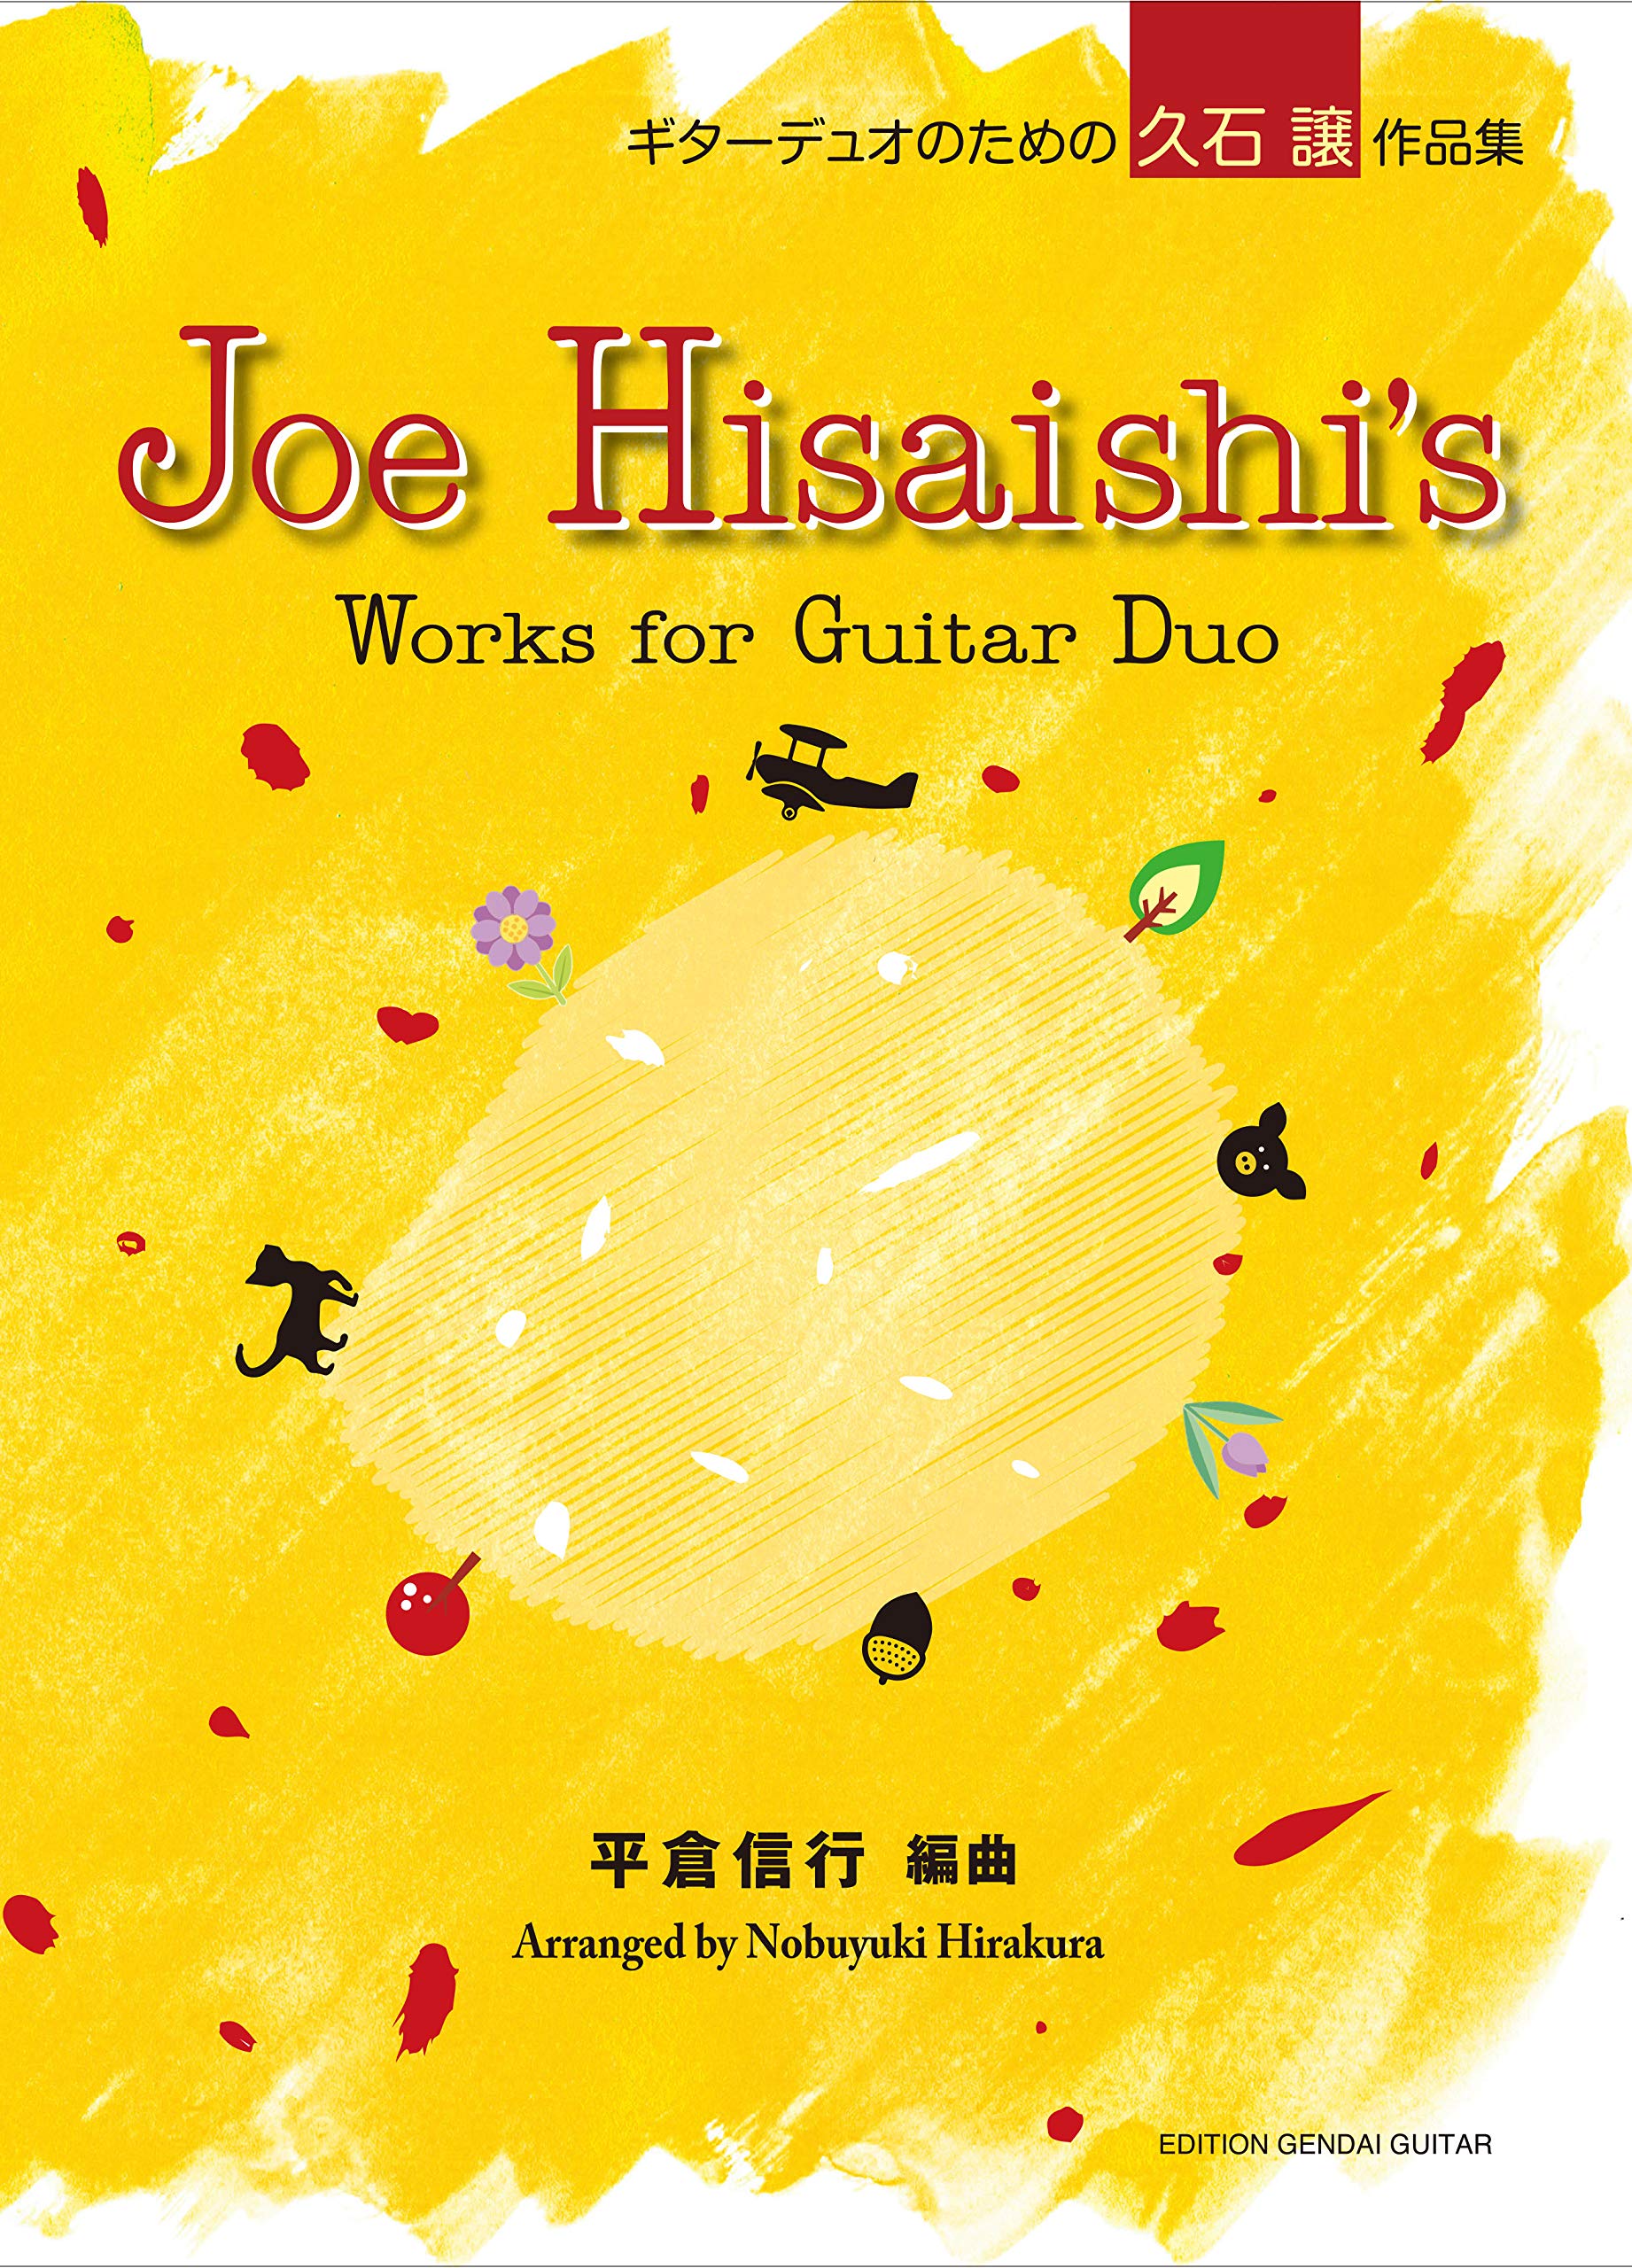 Joe Hisaishi's Works for Guitar Duo